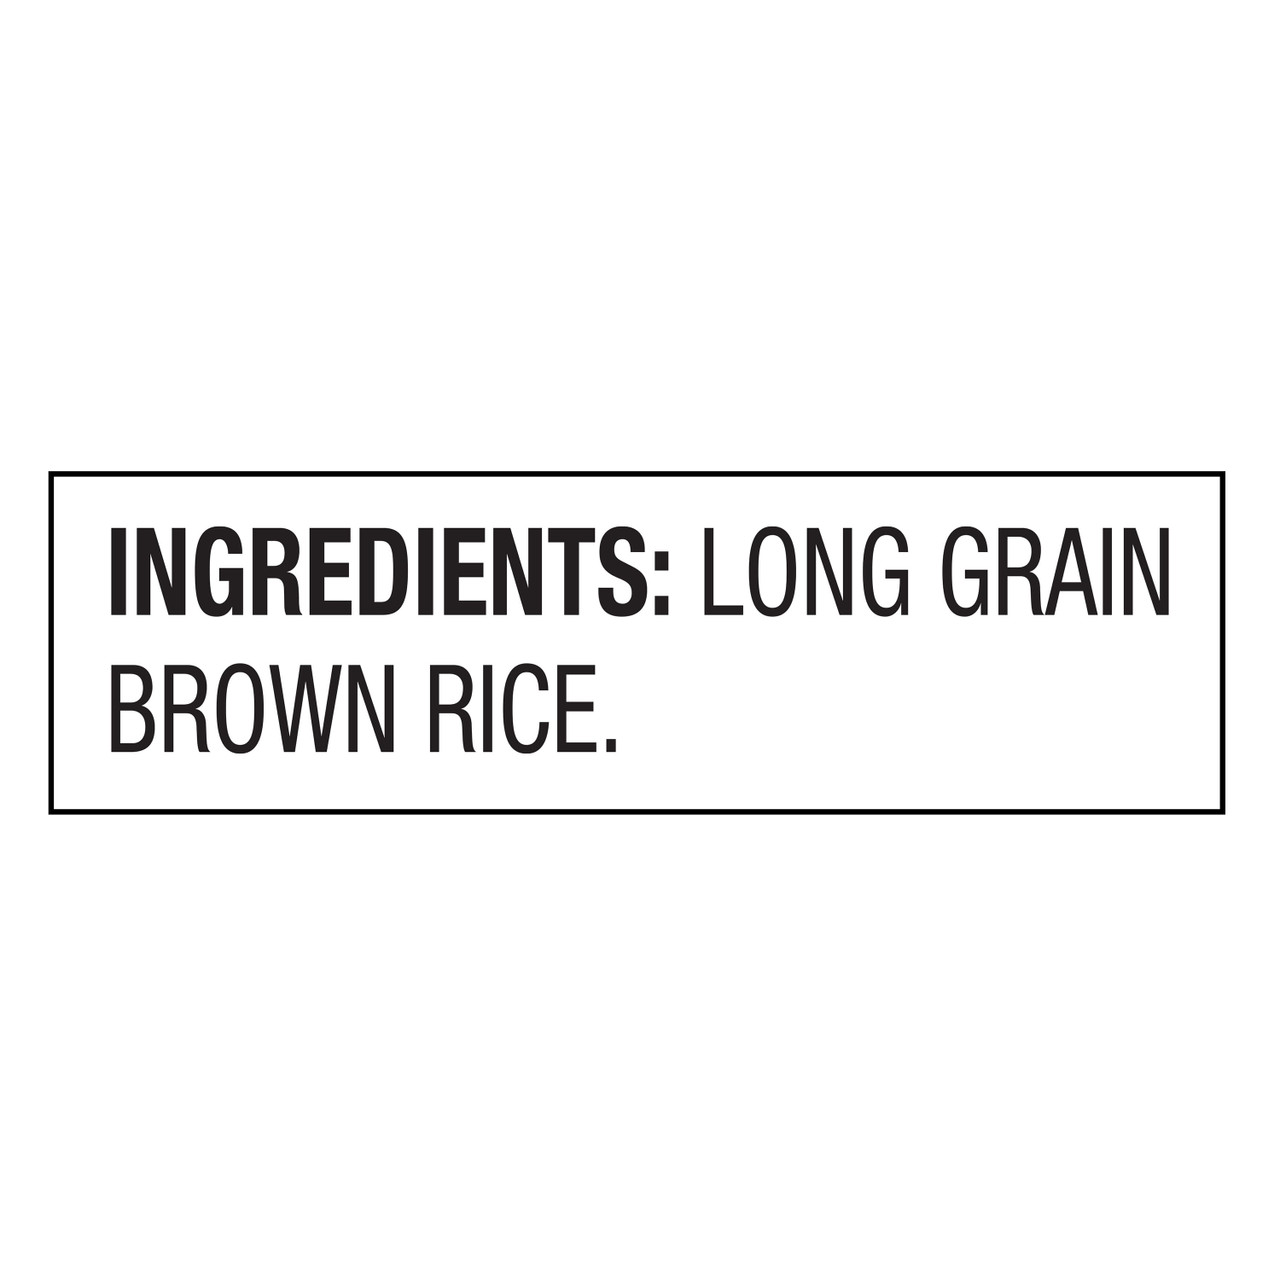 Great Value Brown Rice, Whole grain, 16 oz - *Pre-Order